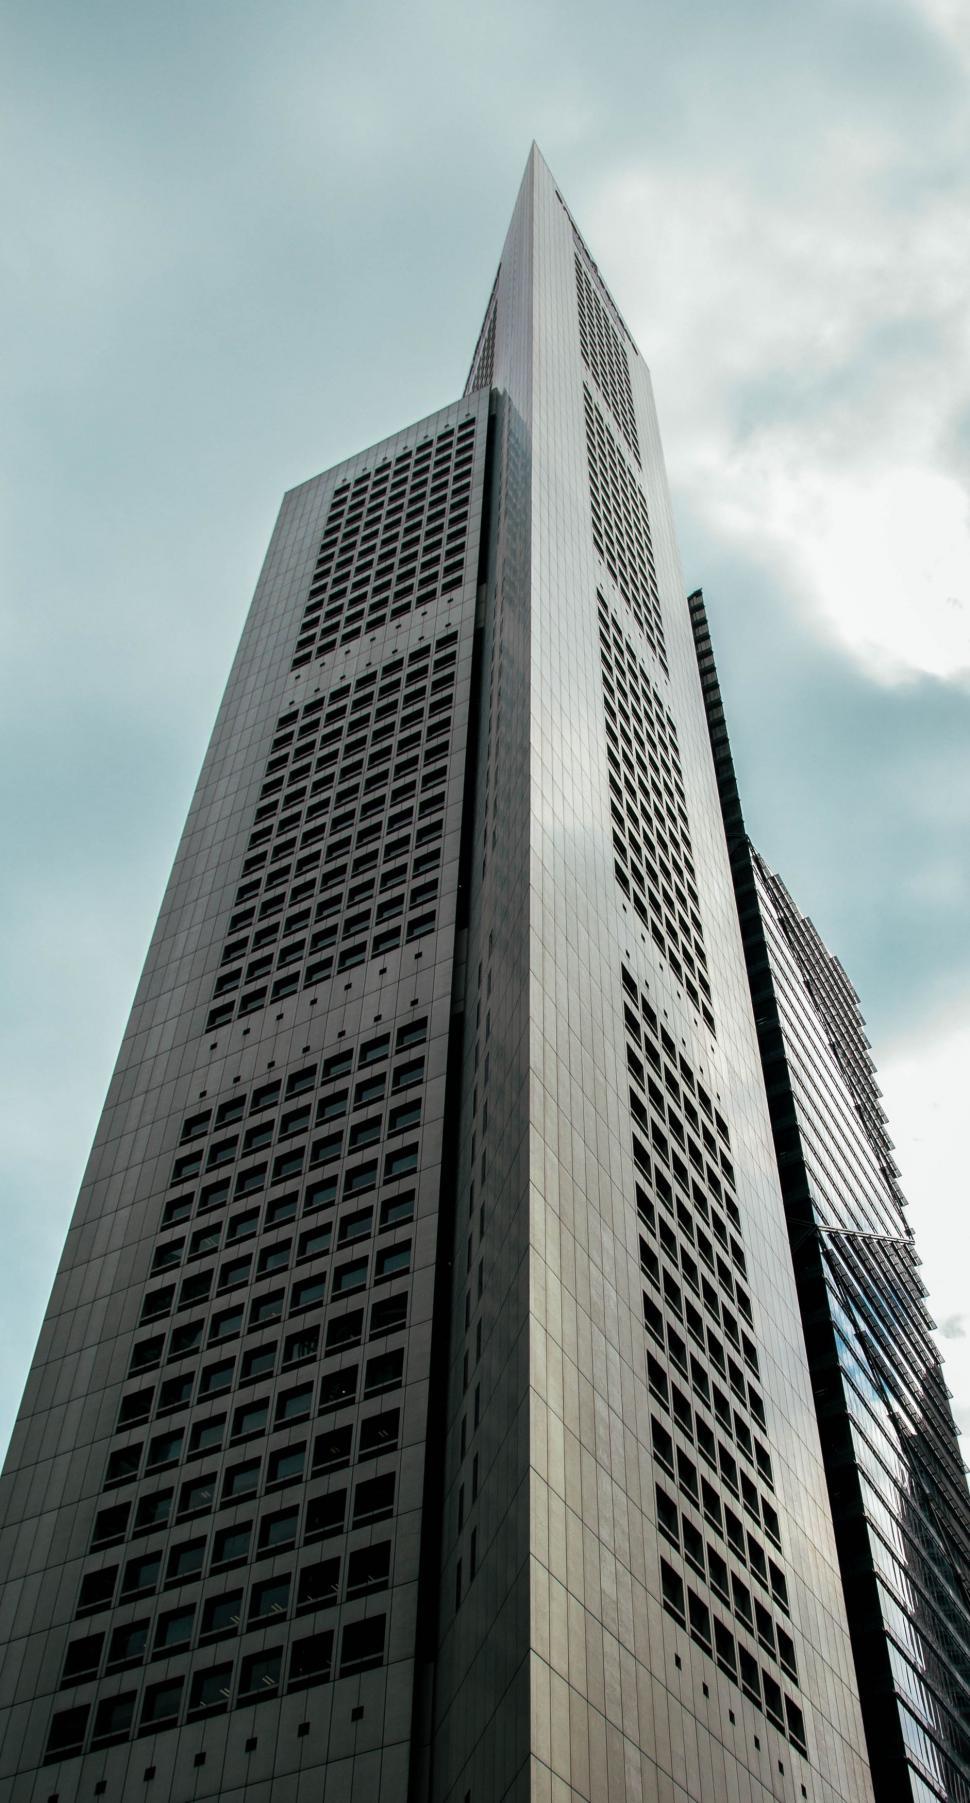 Free Image of Skyscraper from below  